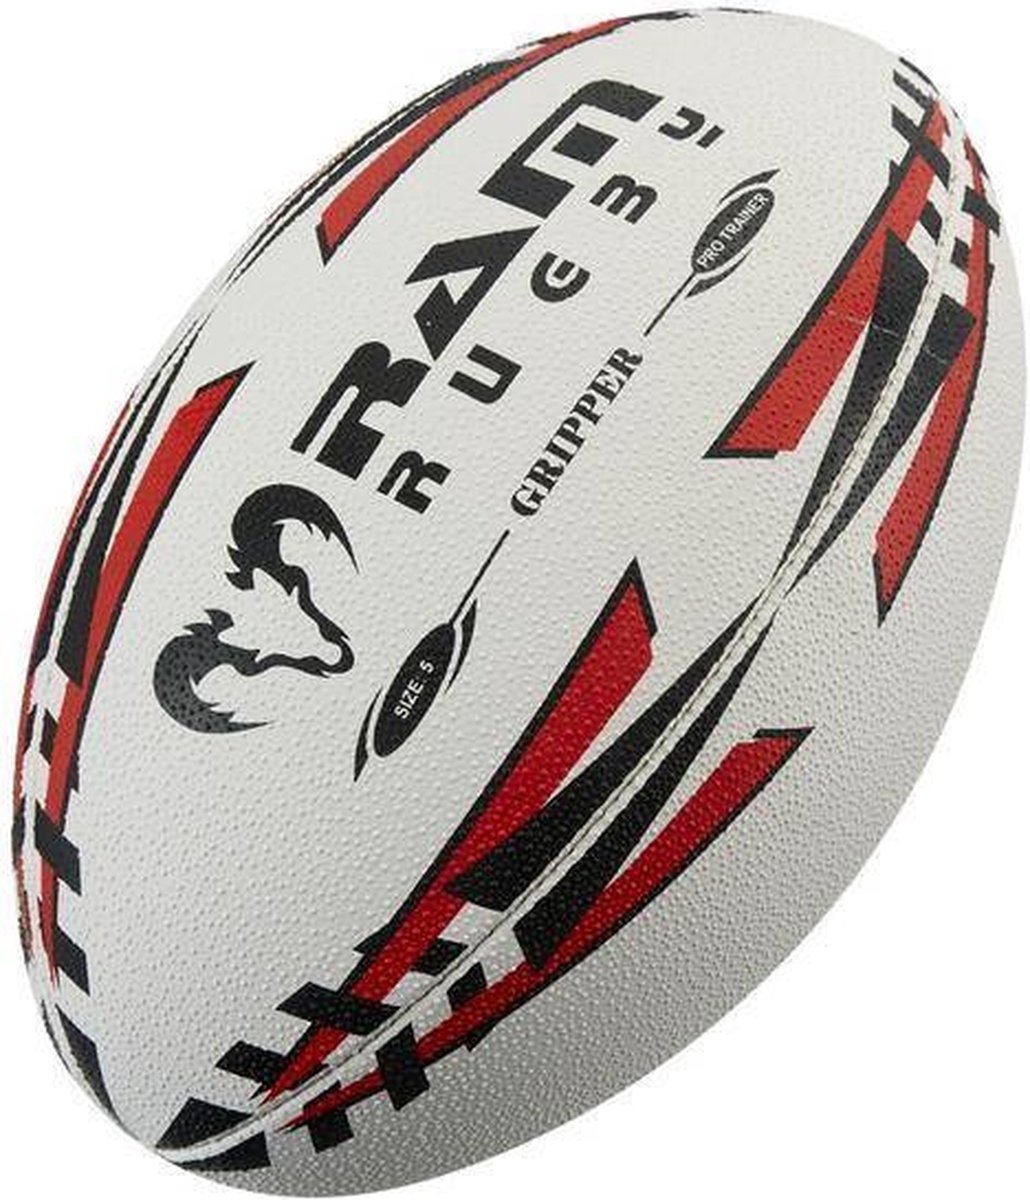 Gripper Pro rugbybal - Jeugd wedstrijdbal - 3D grip - Maat 3 - Fluor